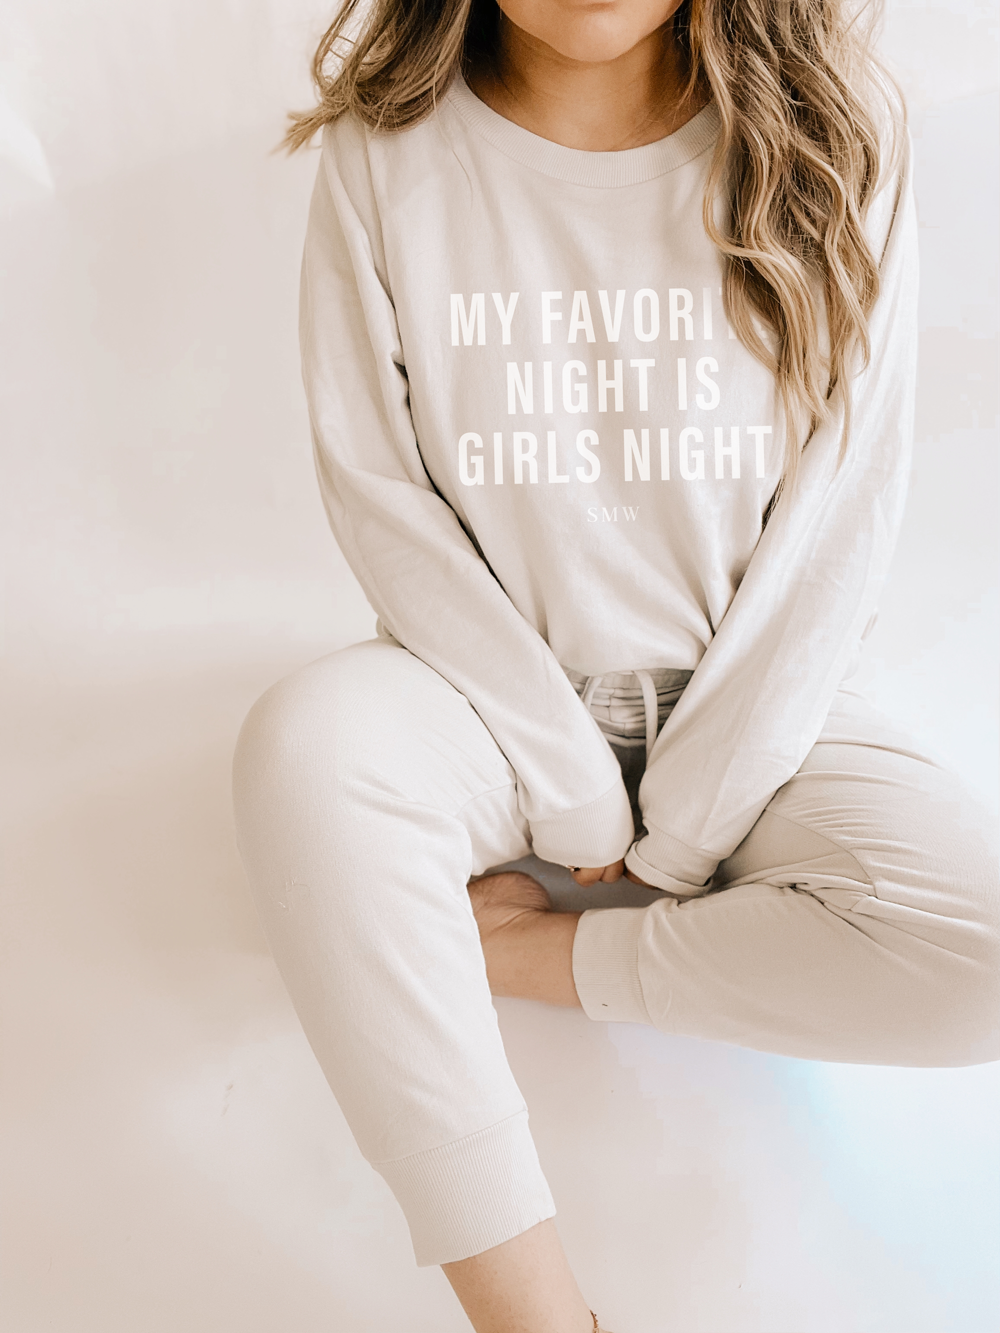 Signature Girls Night Sweatshirt with sweatpants outfit